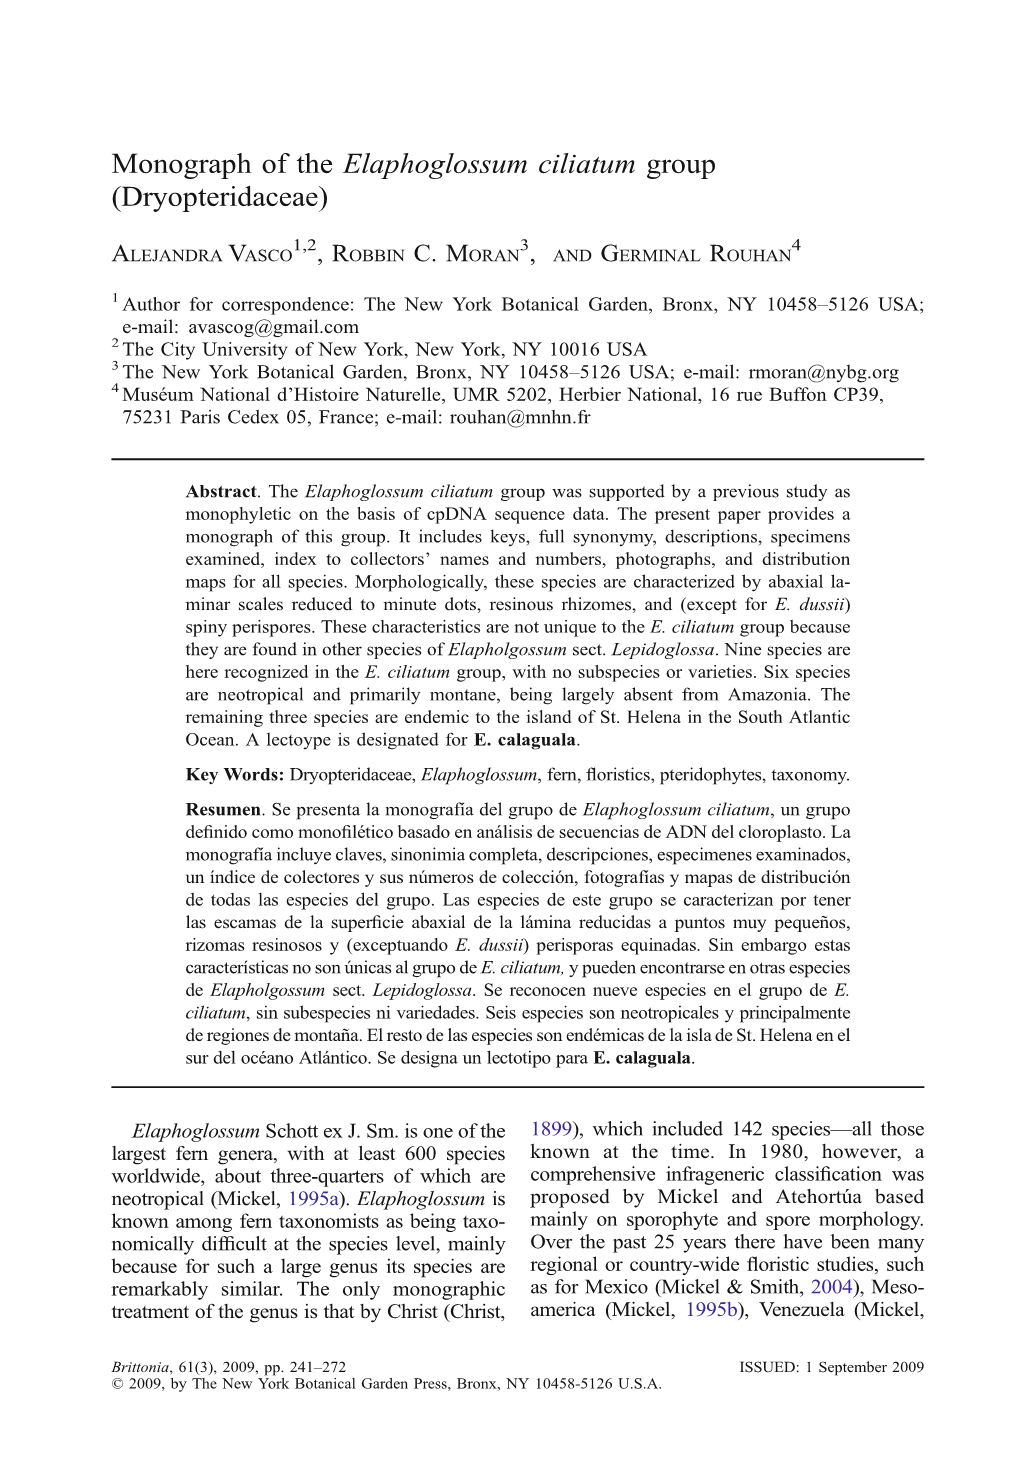 Monograph of the Elaphoglossum Ciliatum Group (Dryopteridaceae)